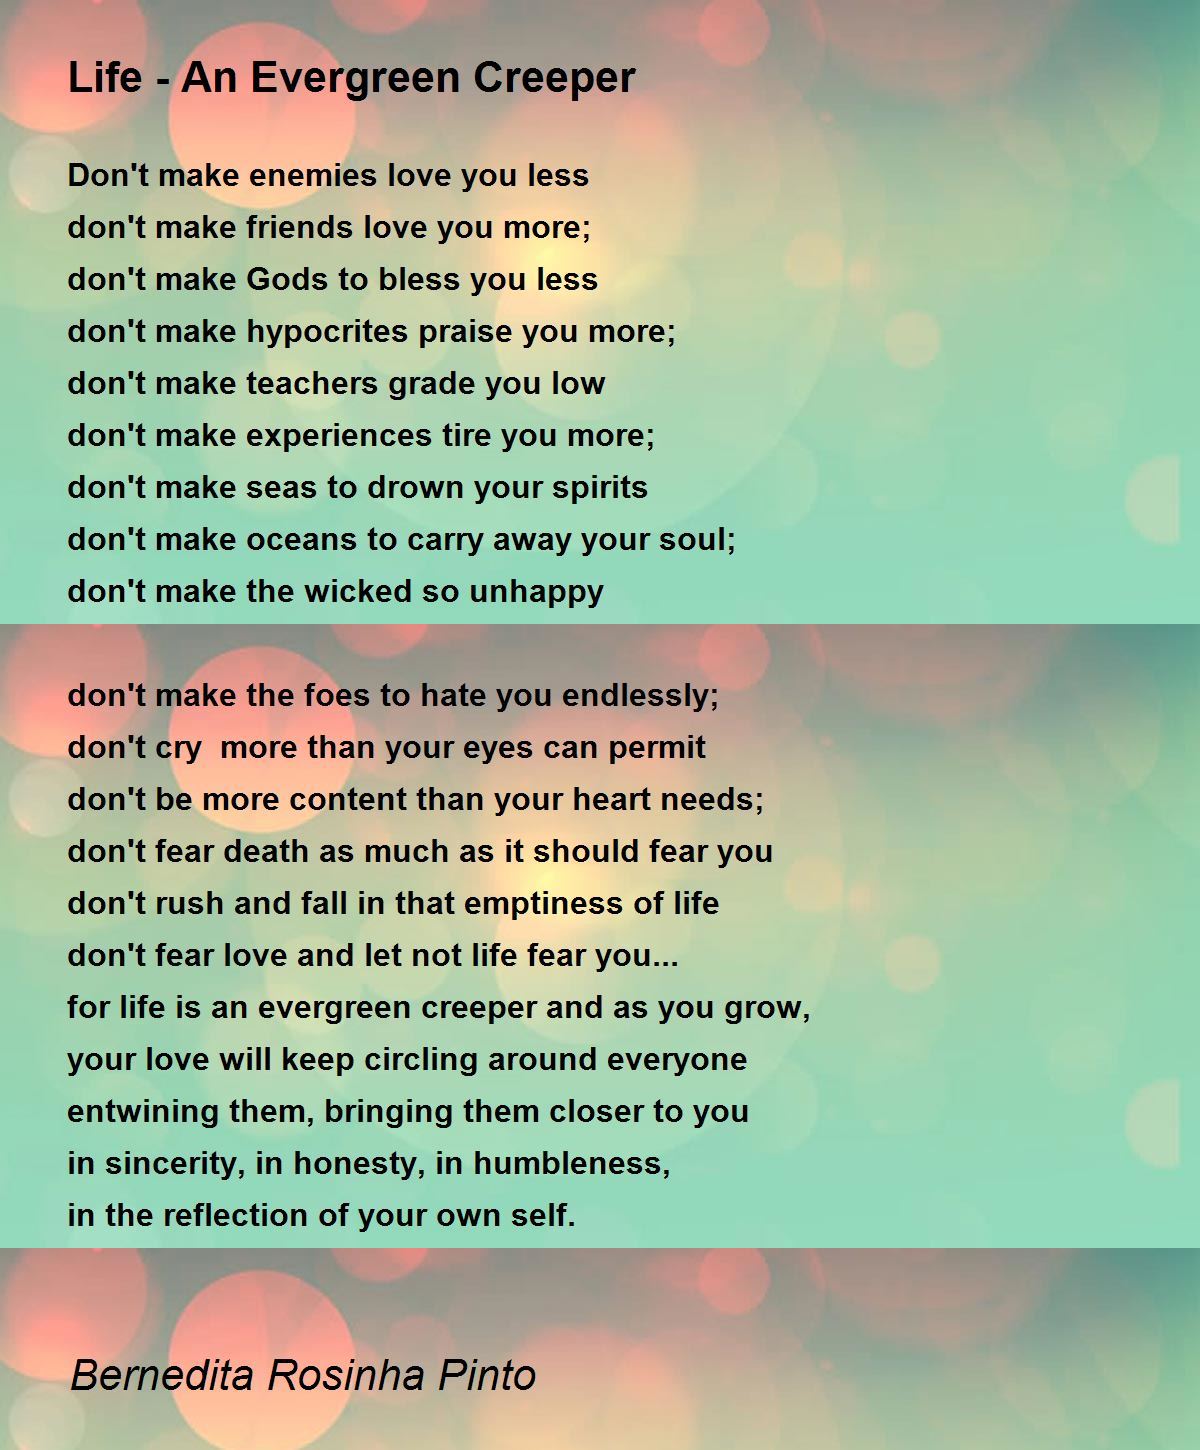 Rules Of The Game (Of Life) - Rules Of The Game (Of Life) Poem by Bernedita  Rosinha Pinto